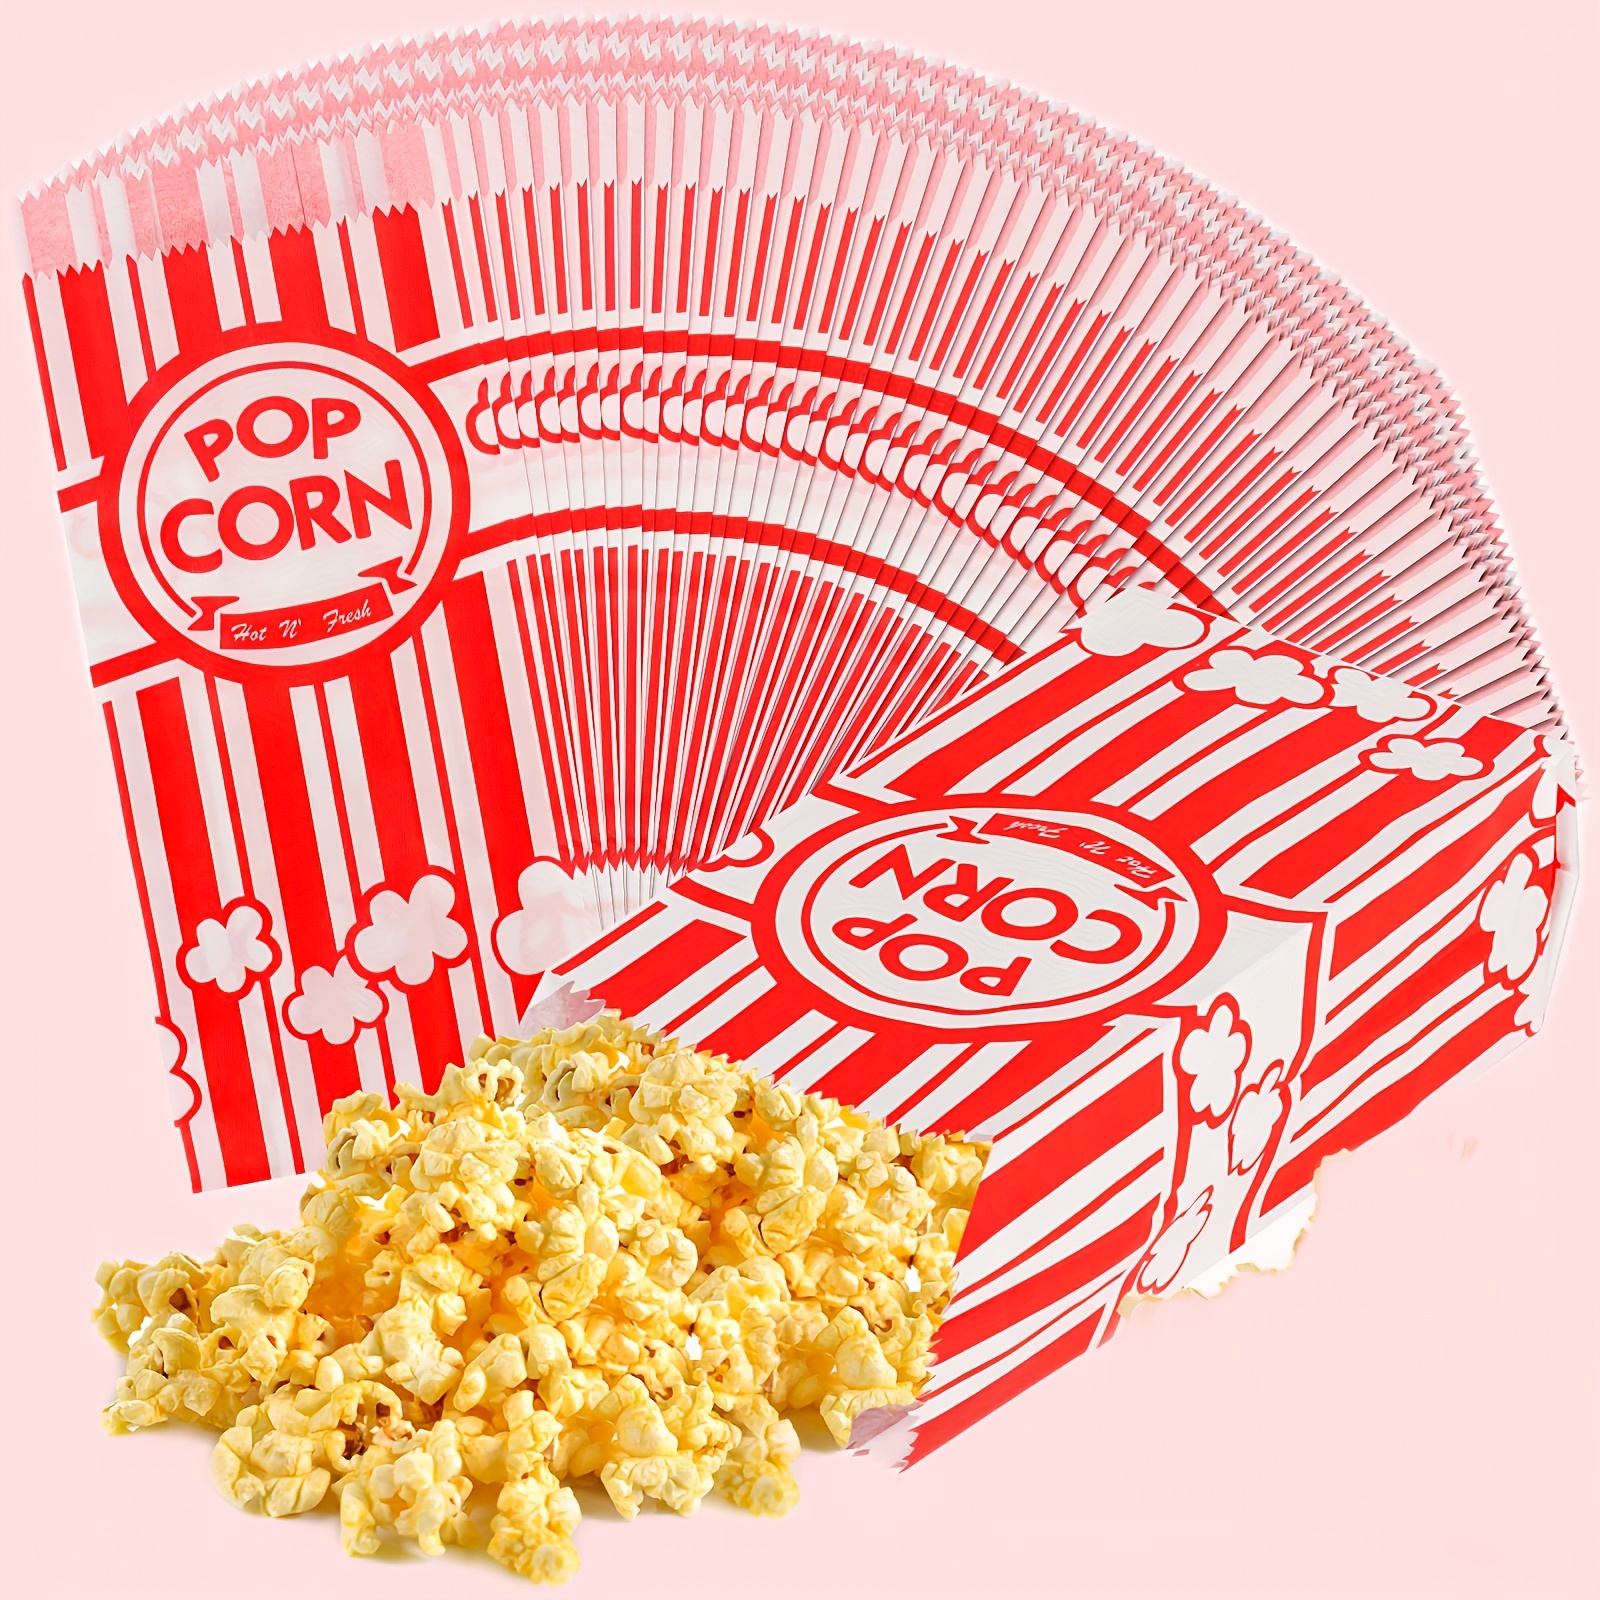 100 Pezzi, Sacchetti Di Carta Per Popcorn, Sacchetti Di Qualità Da 1 Oz,  Accessori Per Macchine Per Popcorn Per Barrette Di Popcorn, Serate Di Cinema